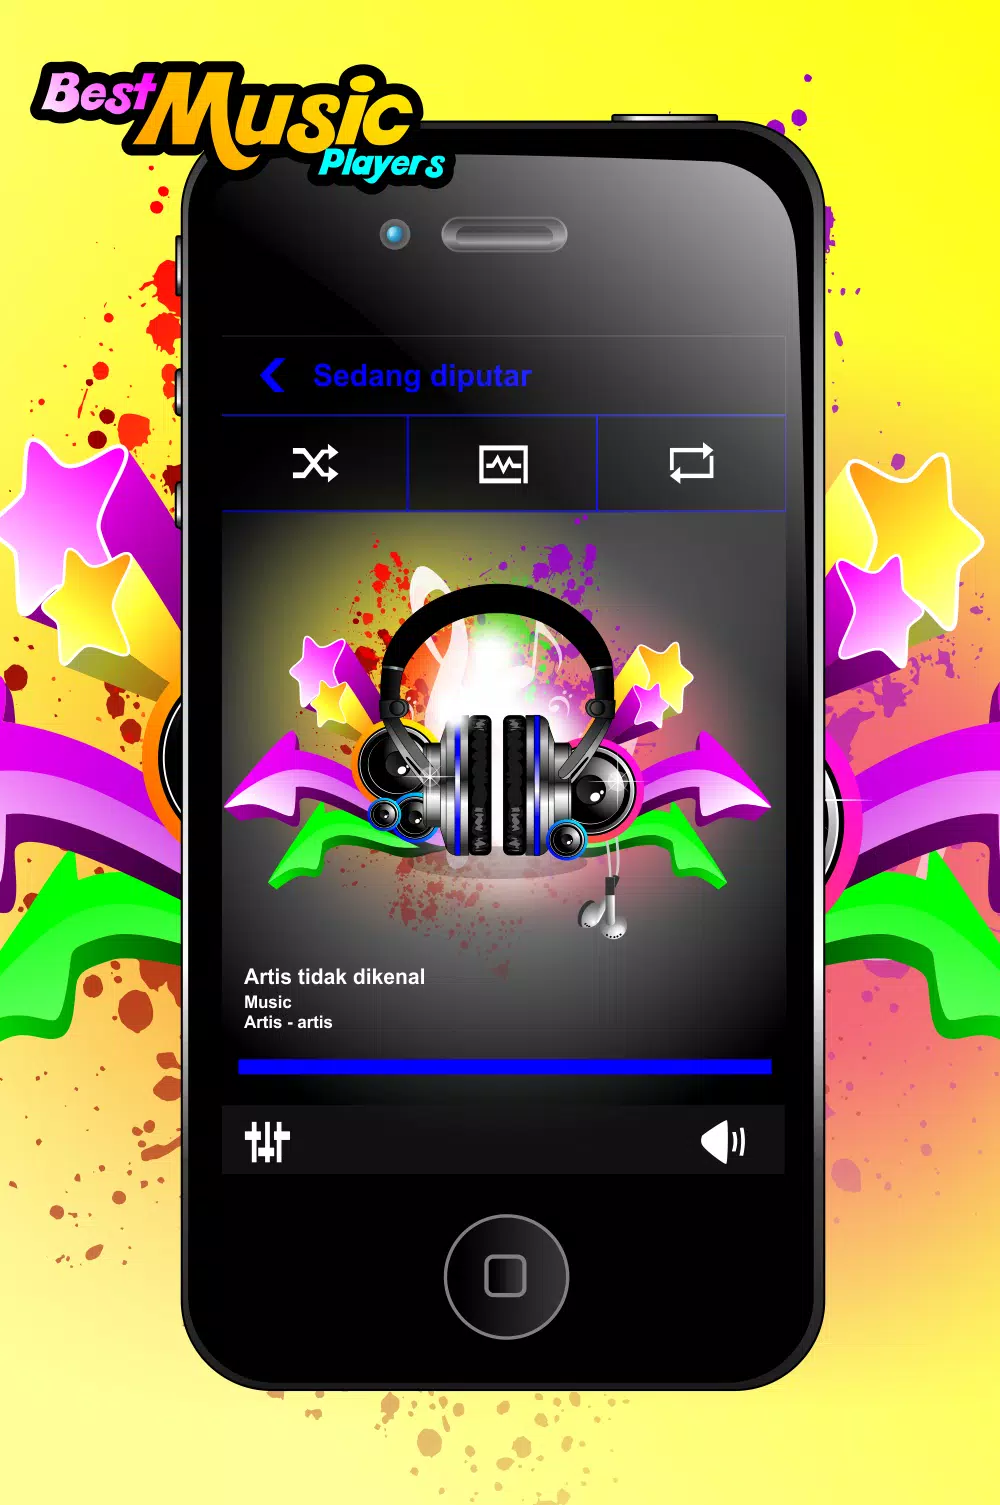 Lidia Buble Mi-e bine APK for Android Download